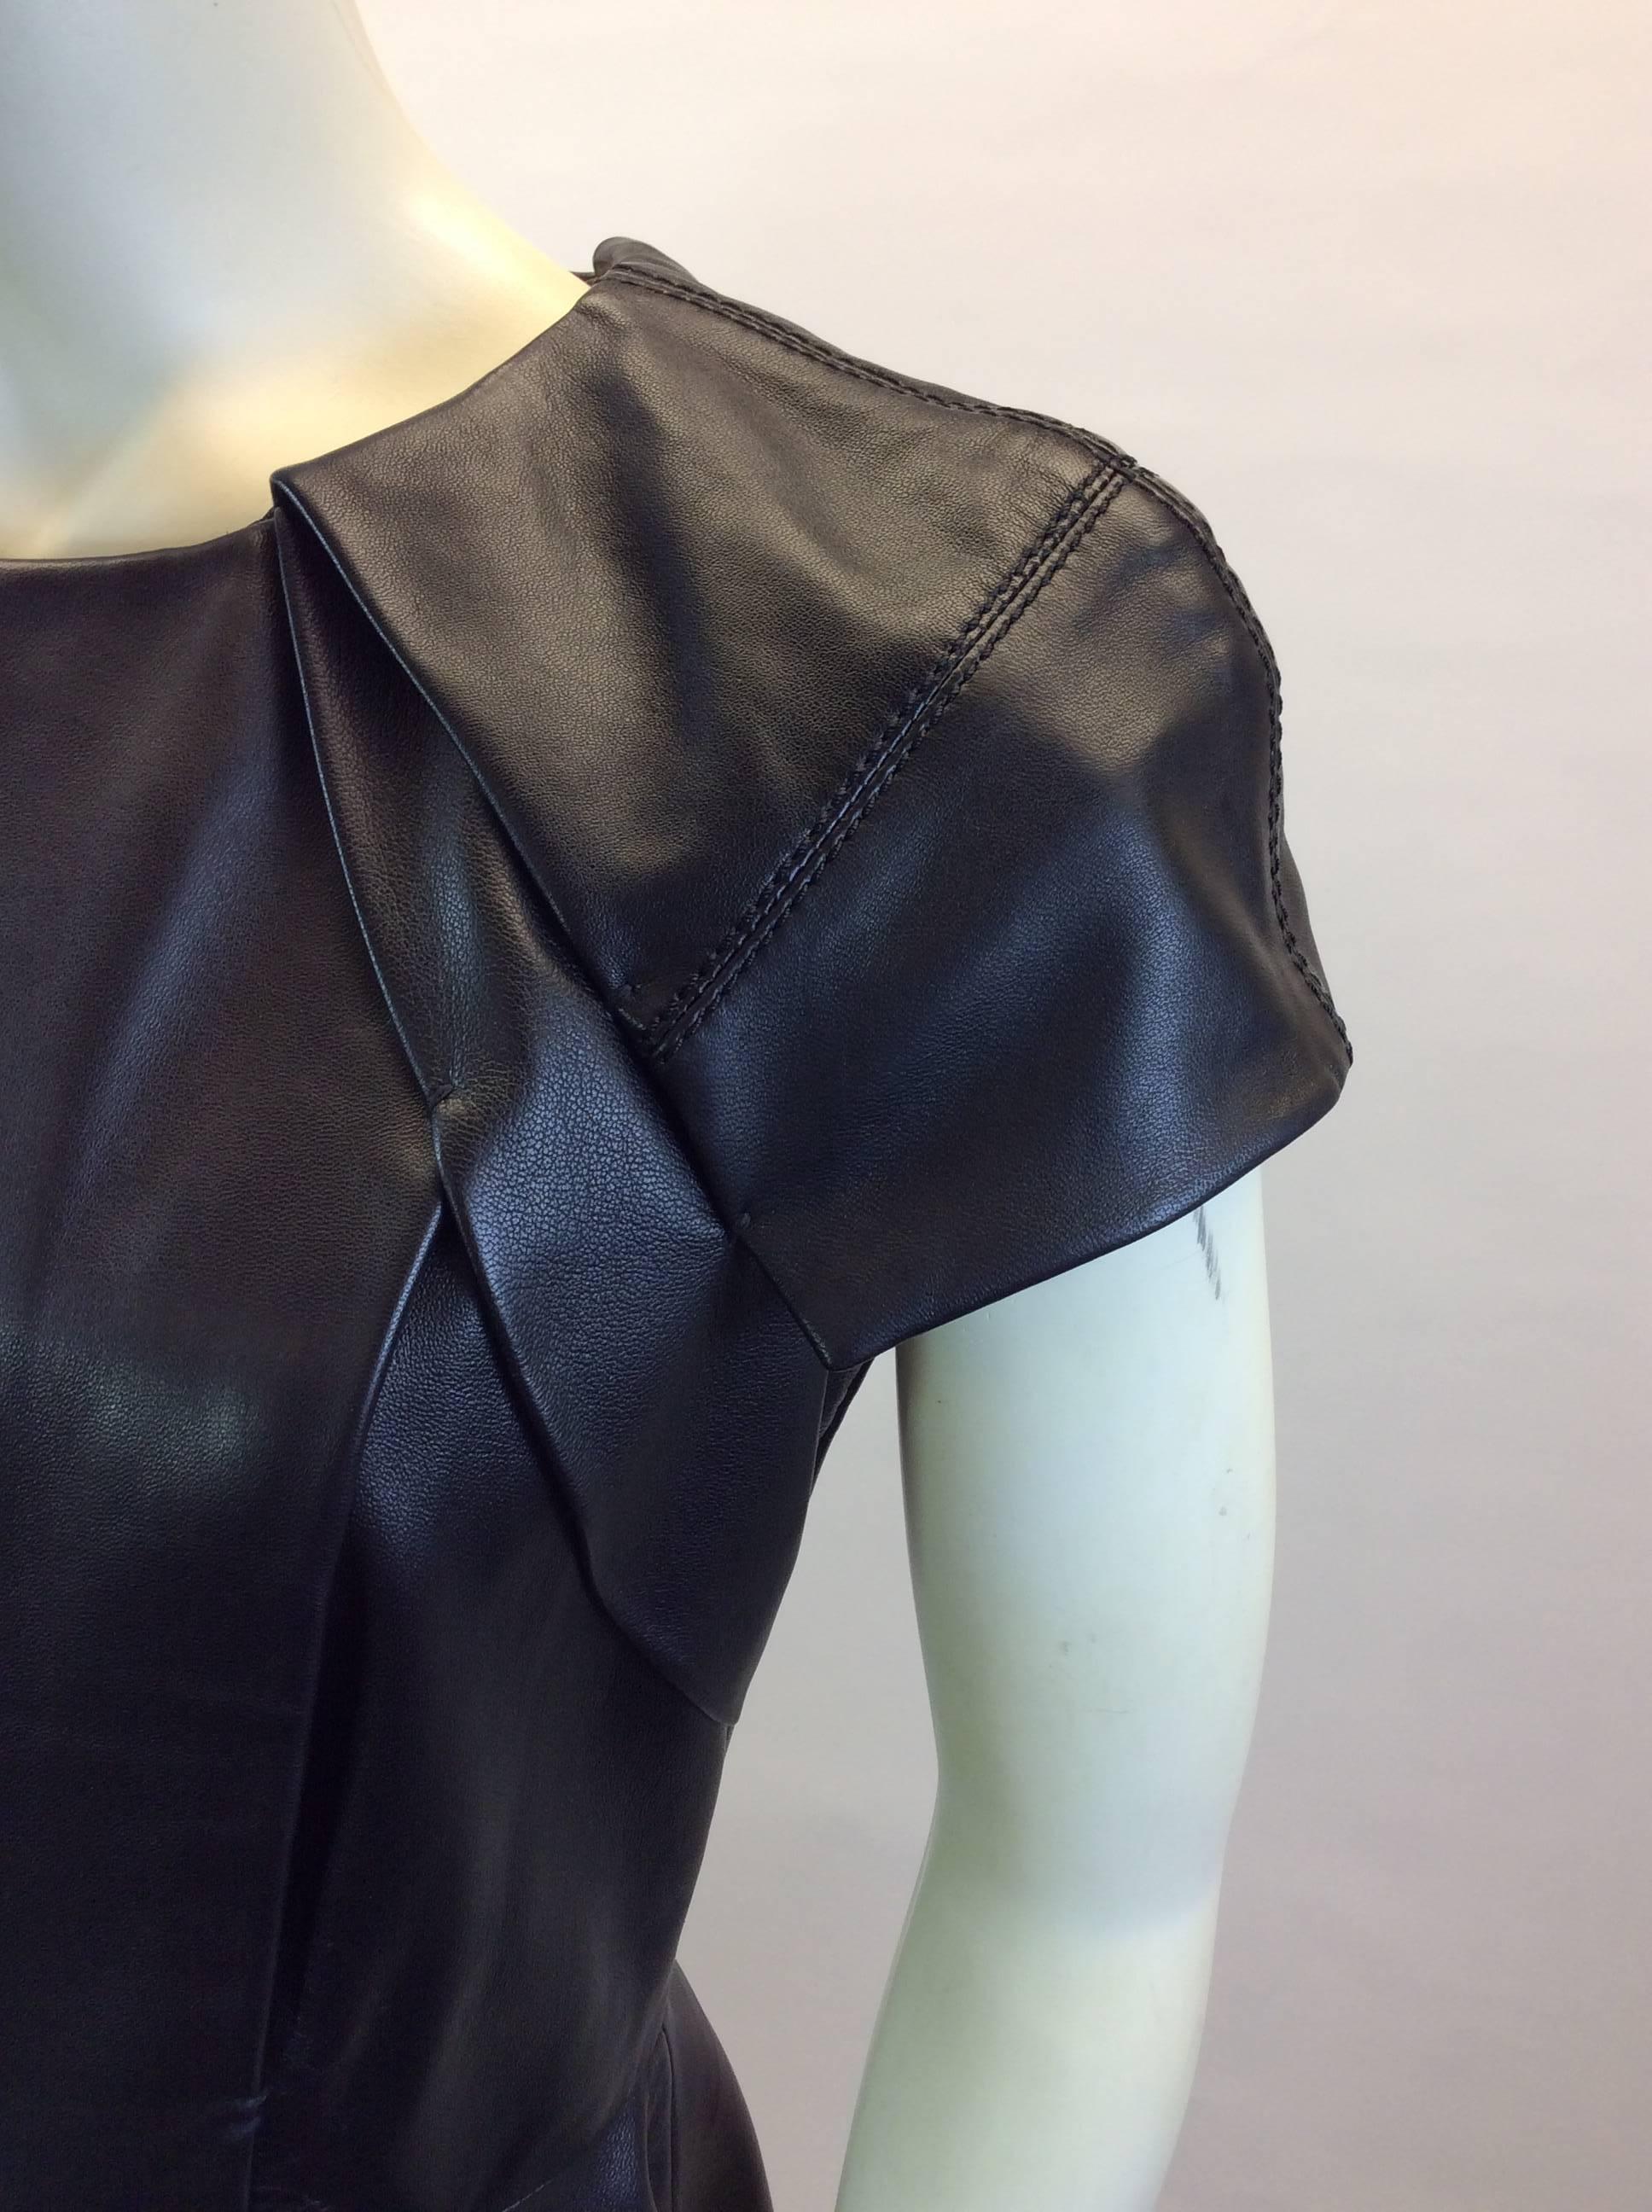 Dice Kayek Black Leather  Structured Dress  For Sale 4